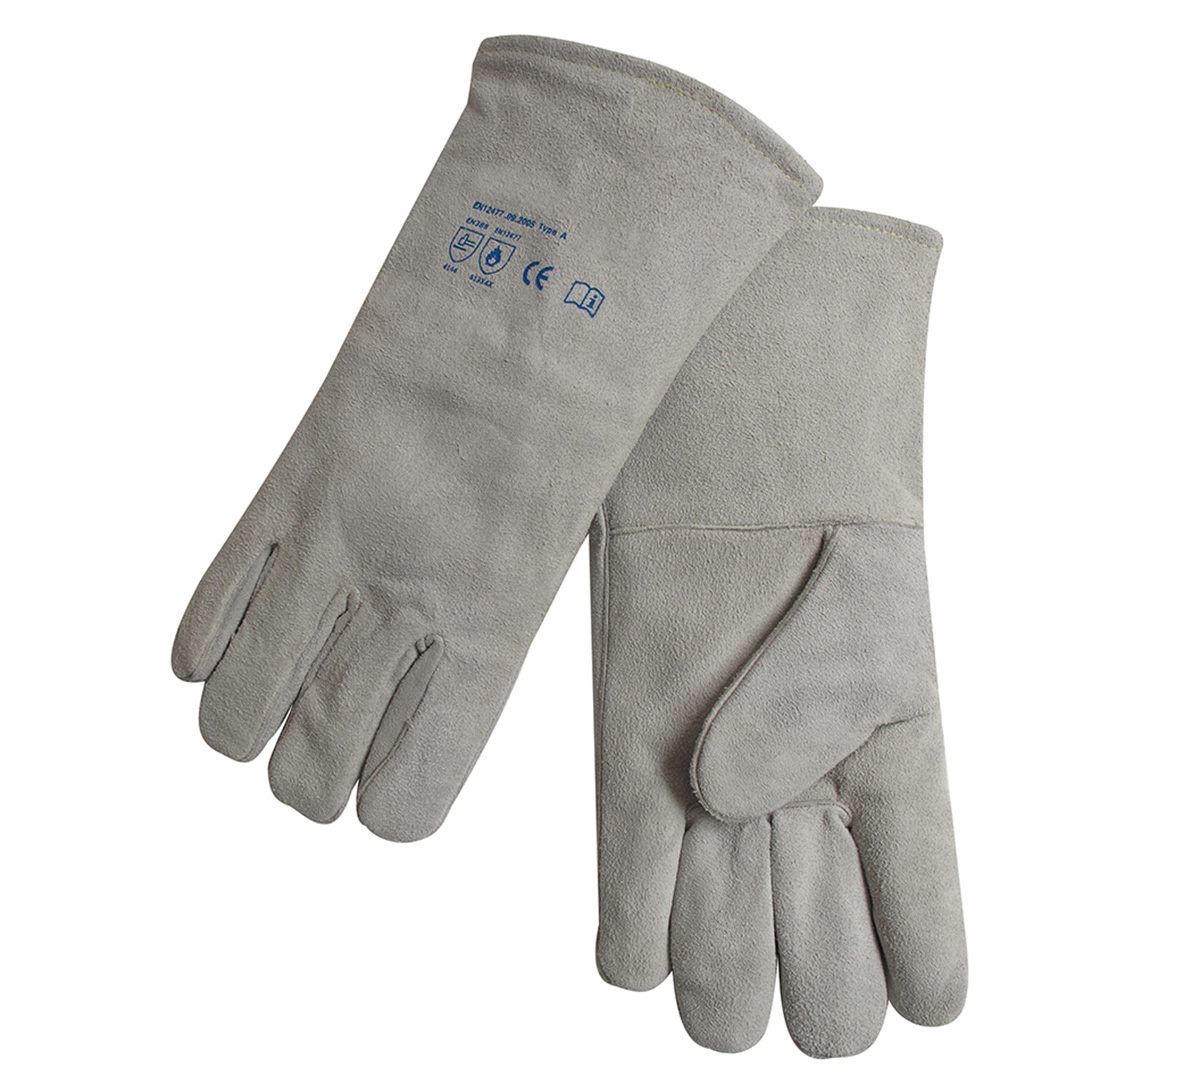 2112 gray gloves官详.jpg